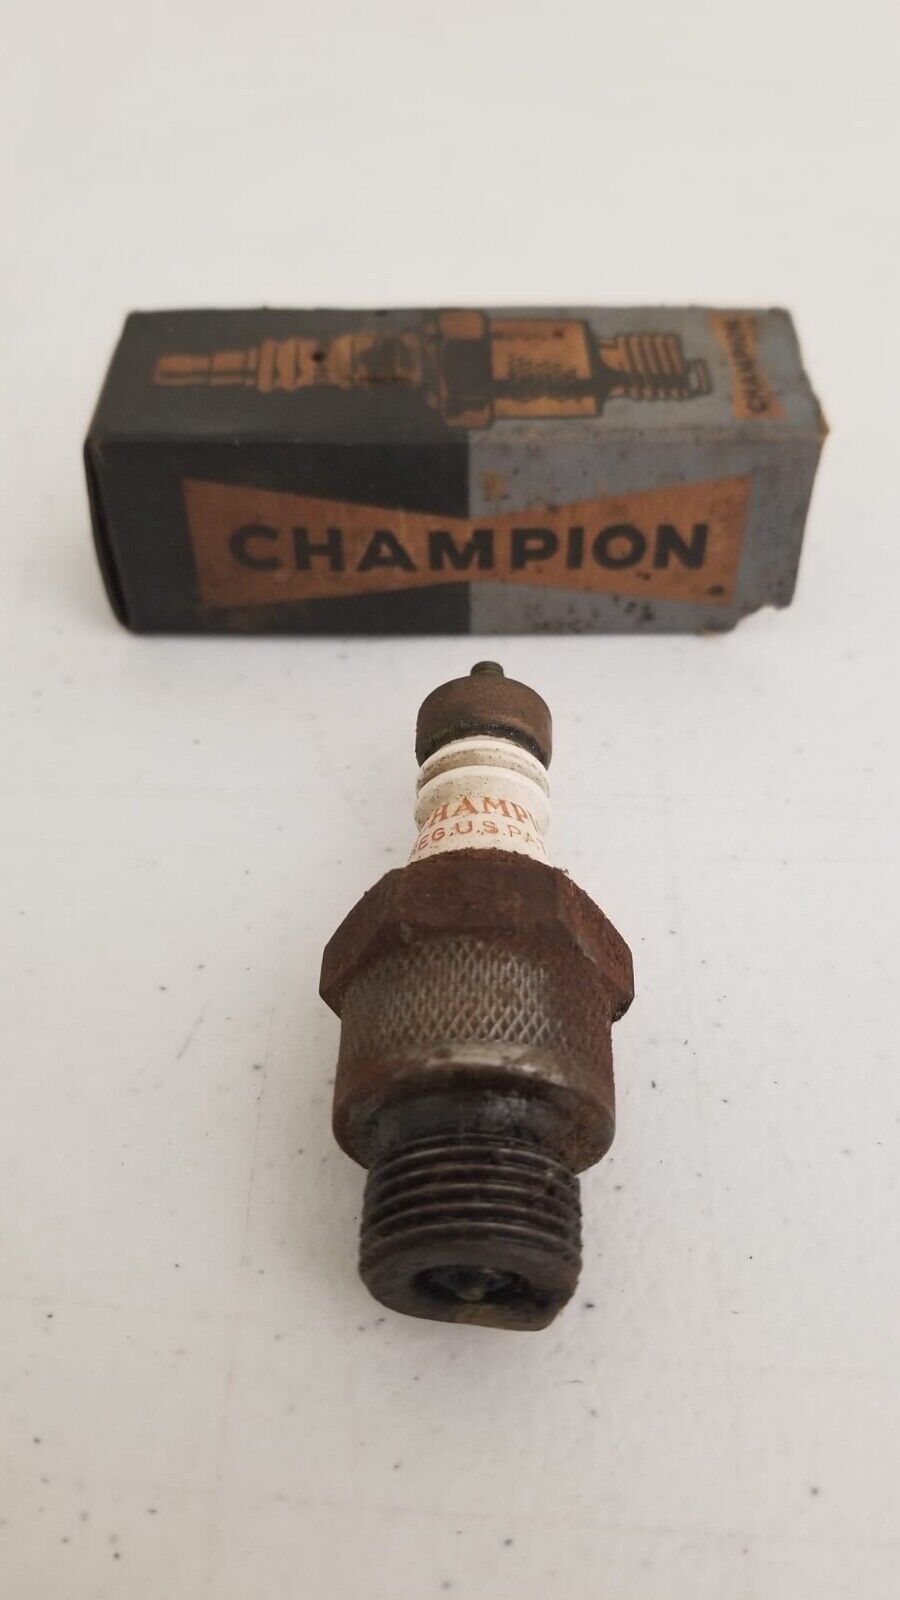 Vintage 1920s-1940s Champion Spark Plug No. 7 with Original Box - Automotive His